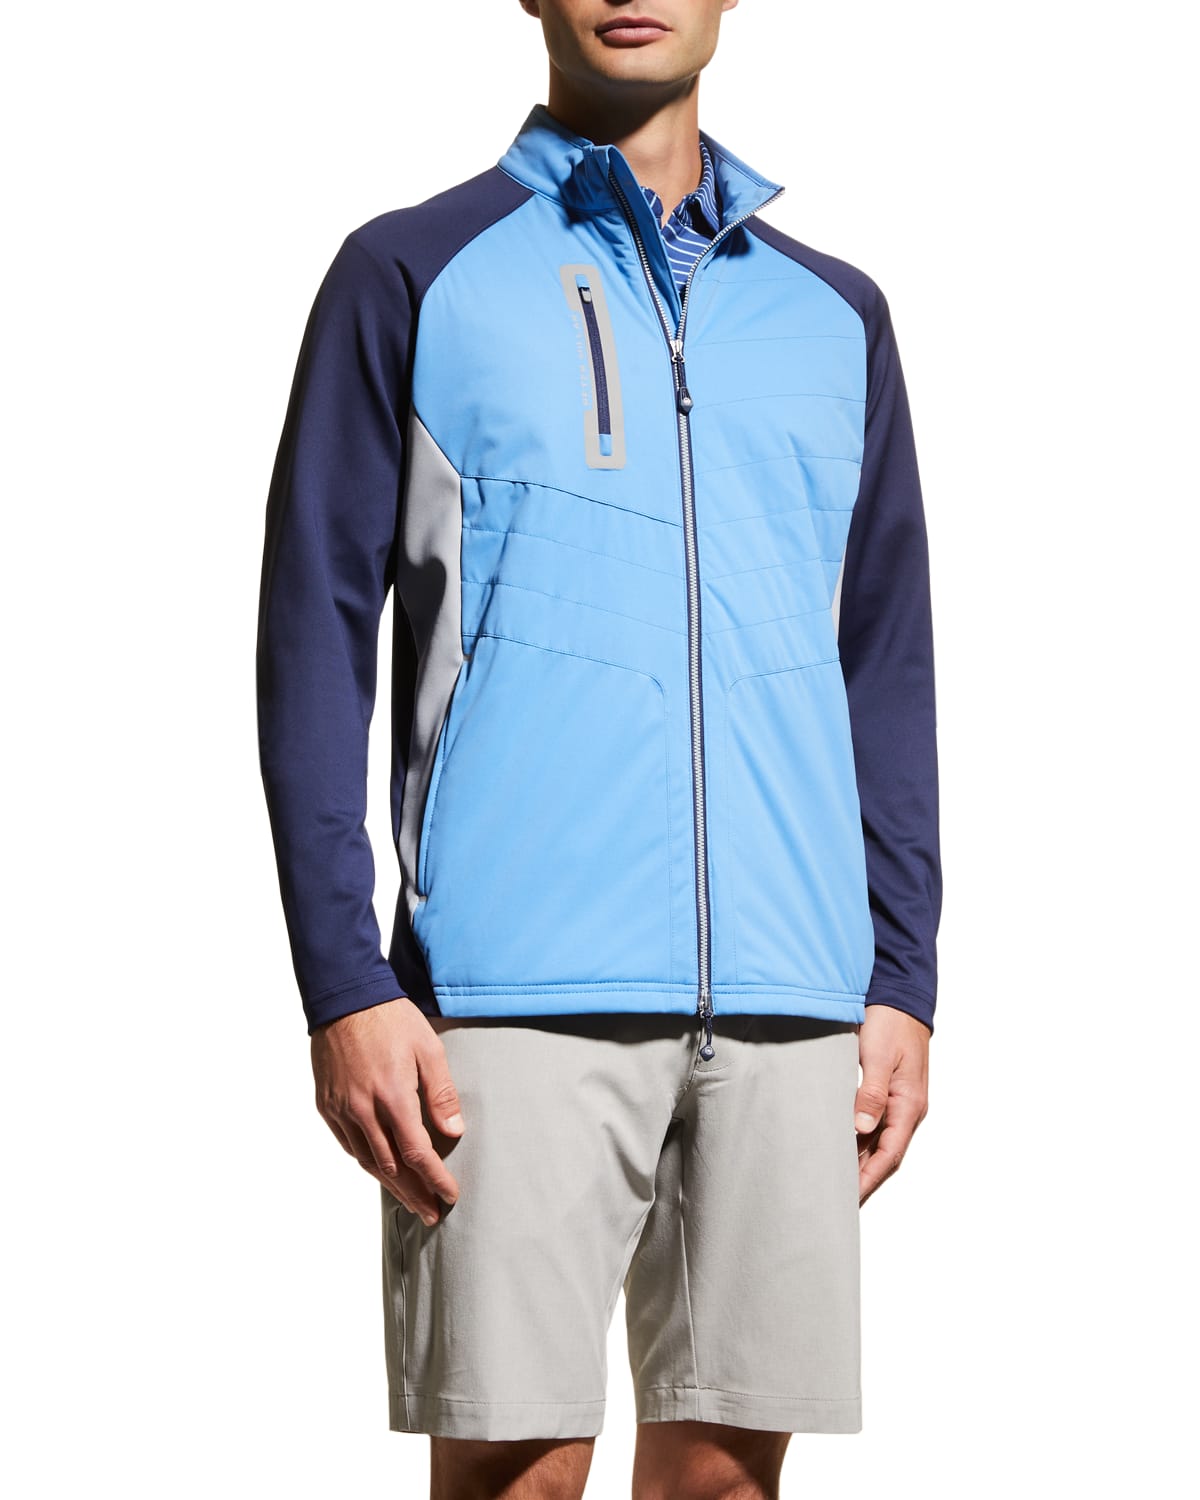 Peter Millar Men's Merge Elite Hybrid Zip Jacket